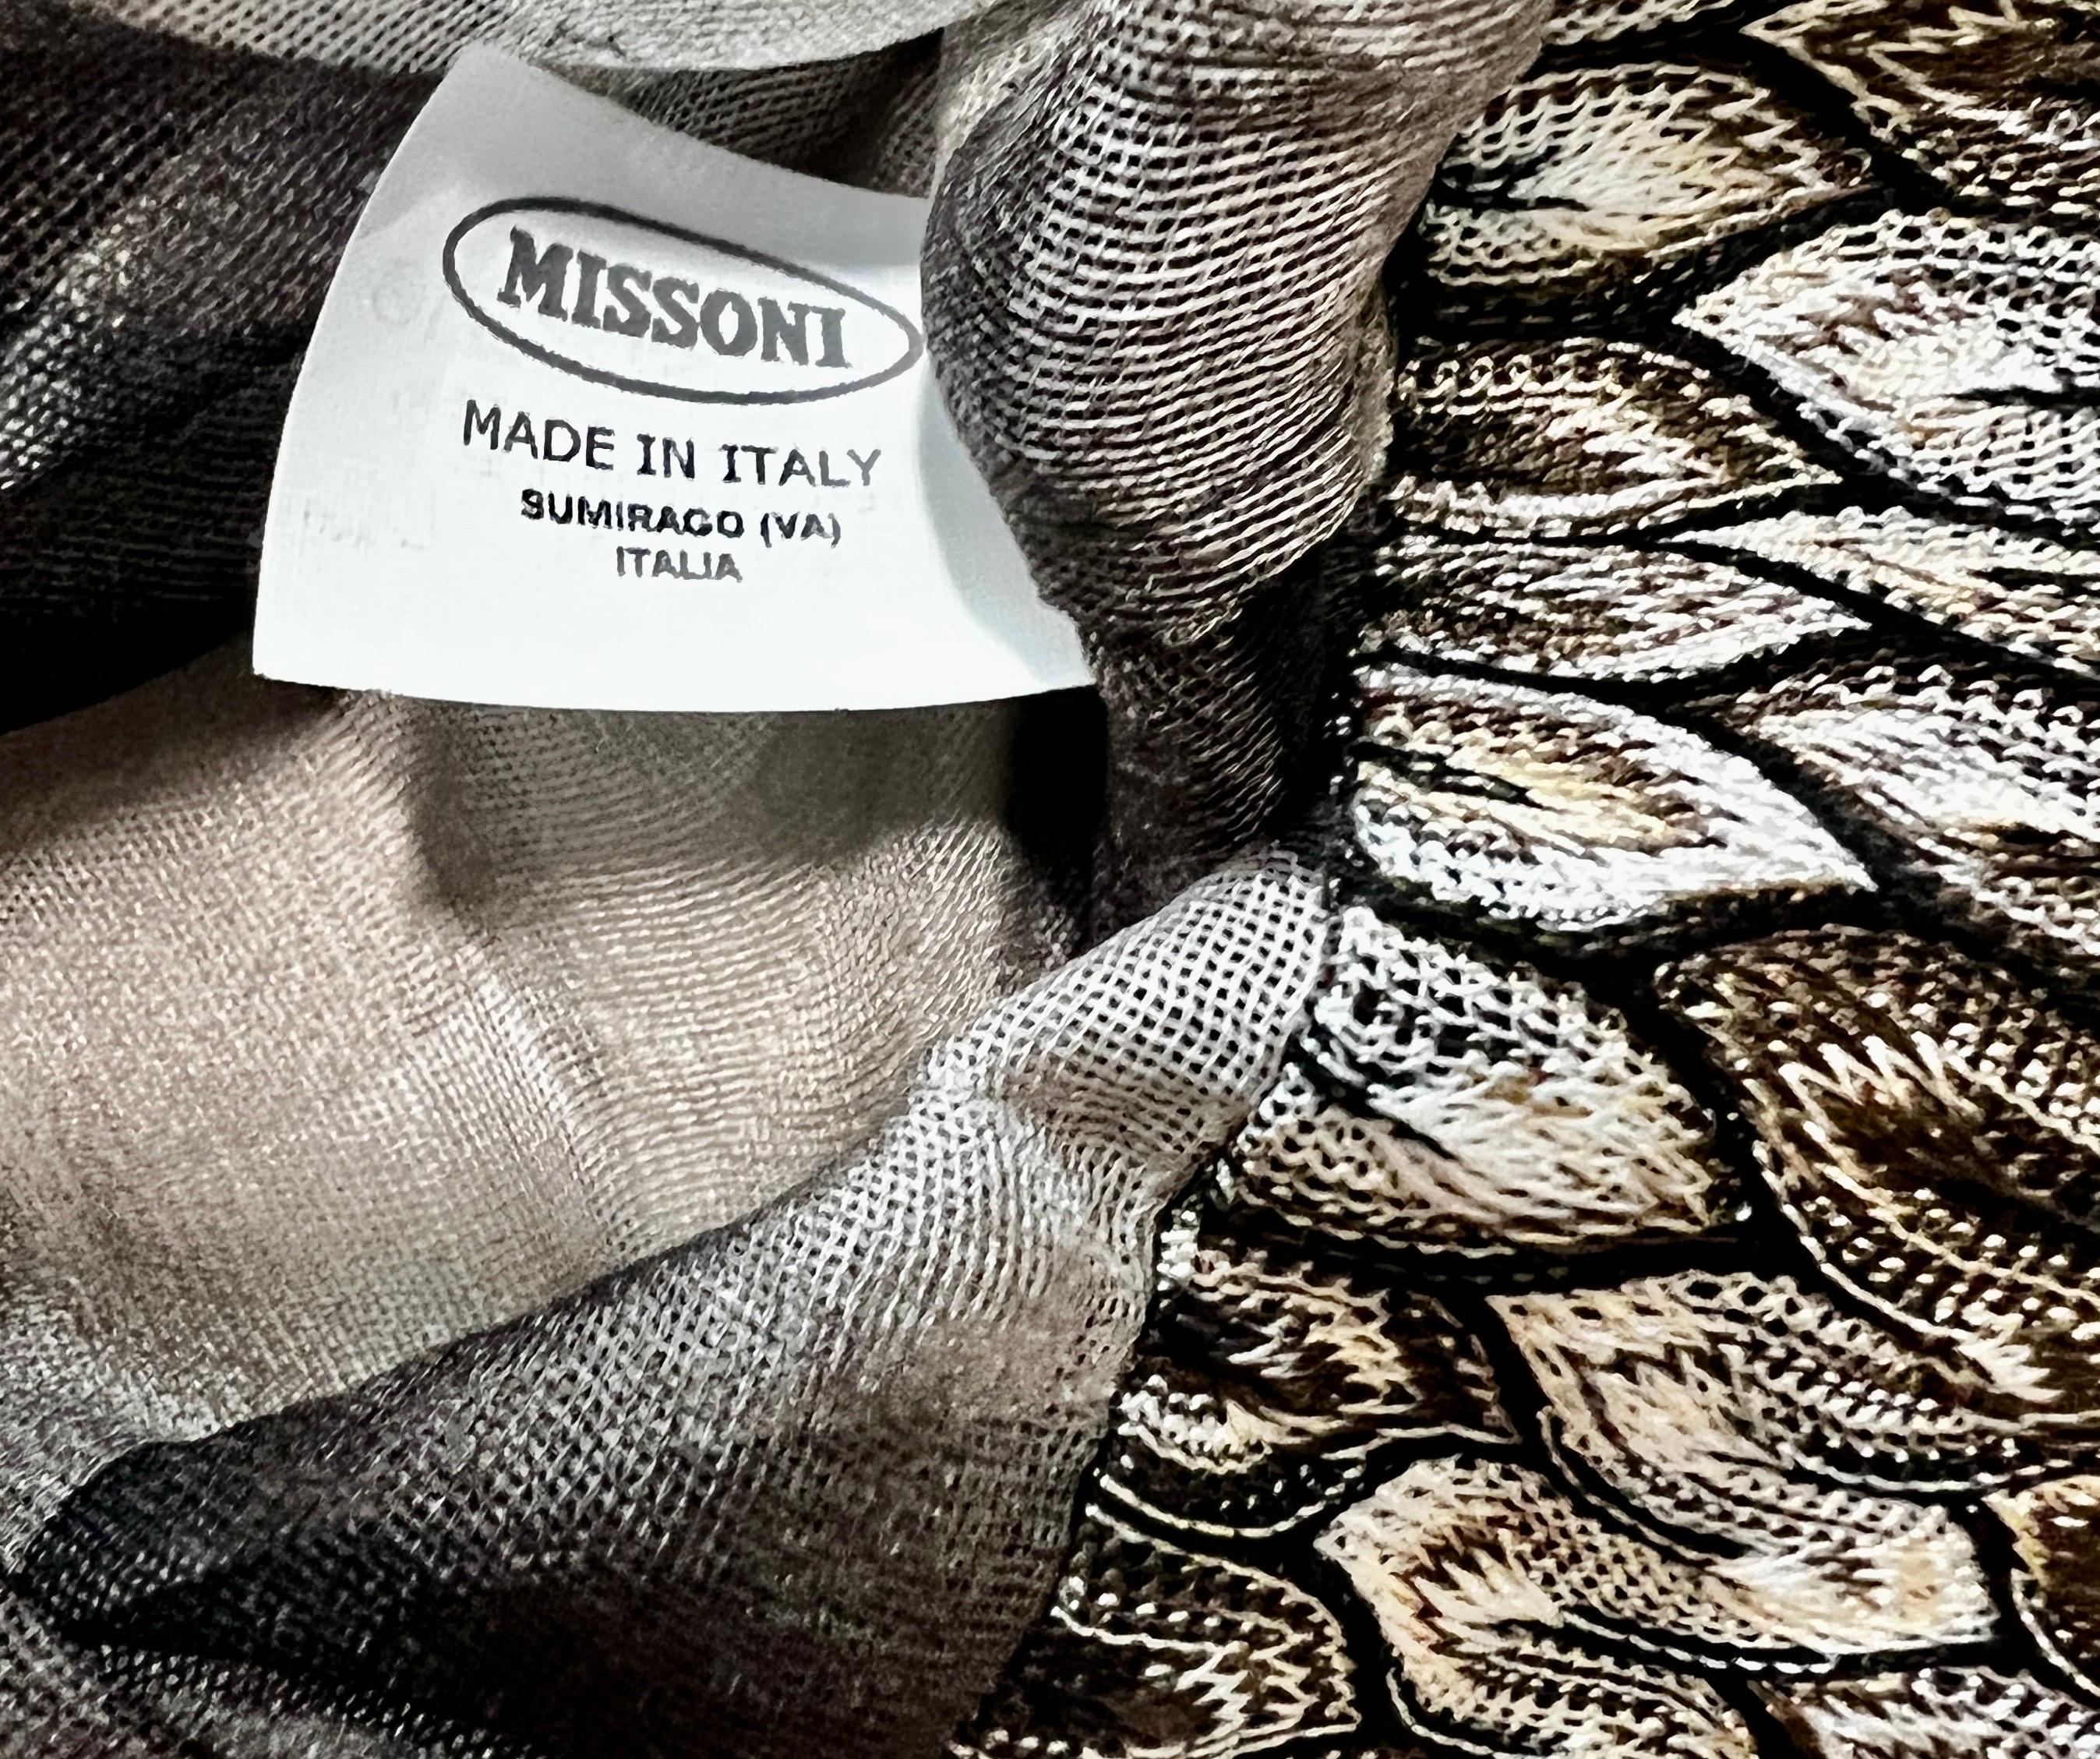 UNWORN Missoni Crochet Knit & Silk Blouse Top 40 In Good Condition For Sale In Switzerland, CH